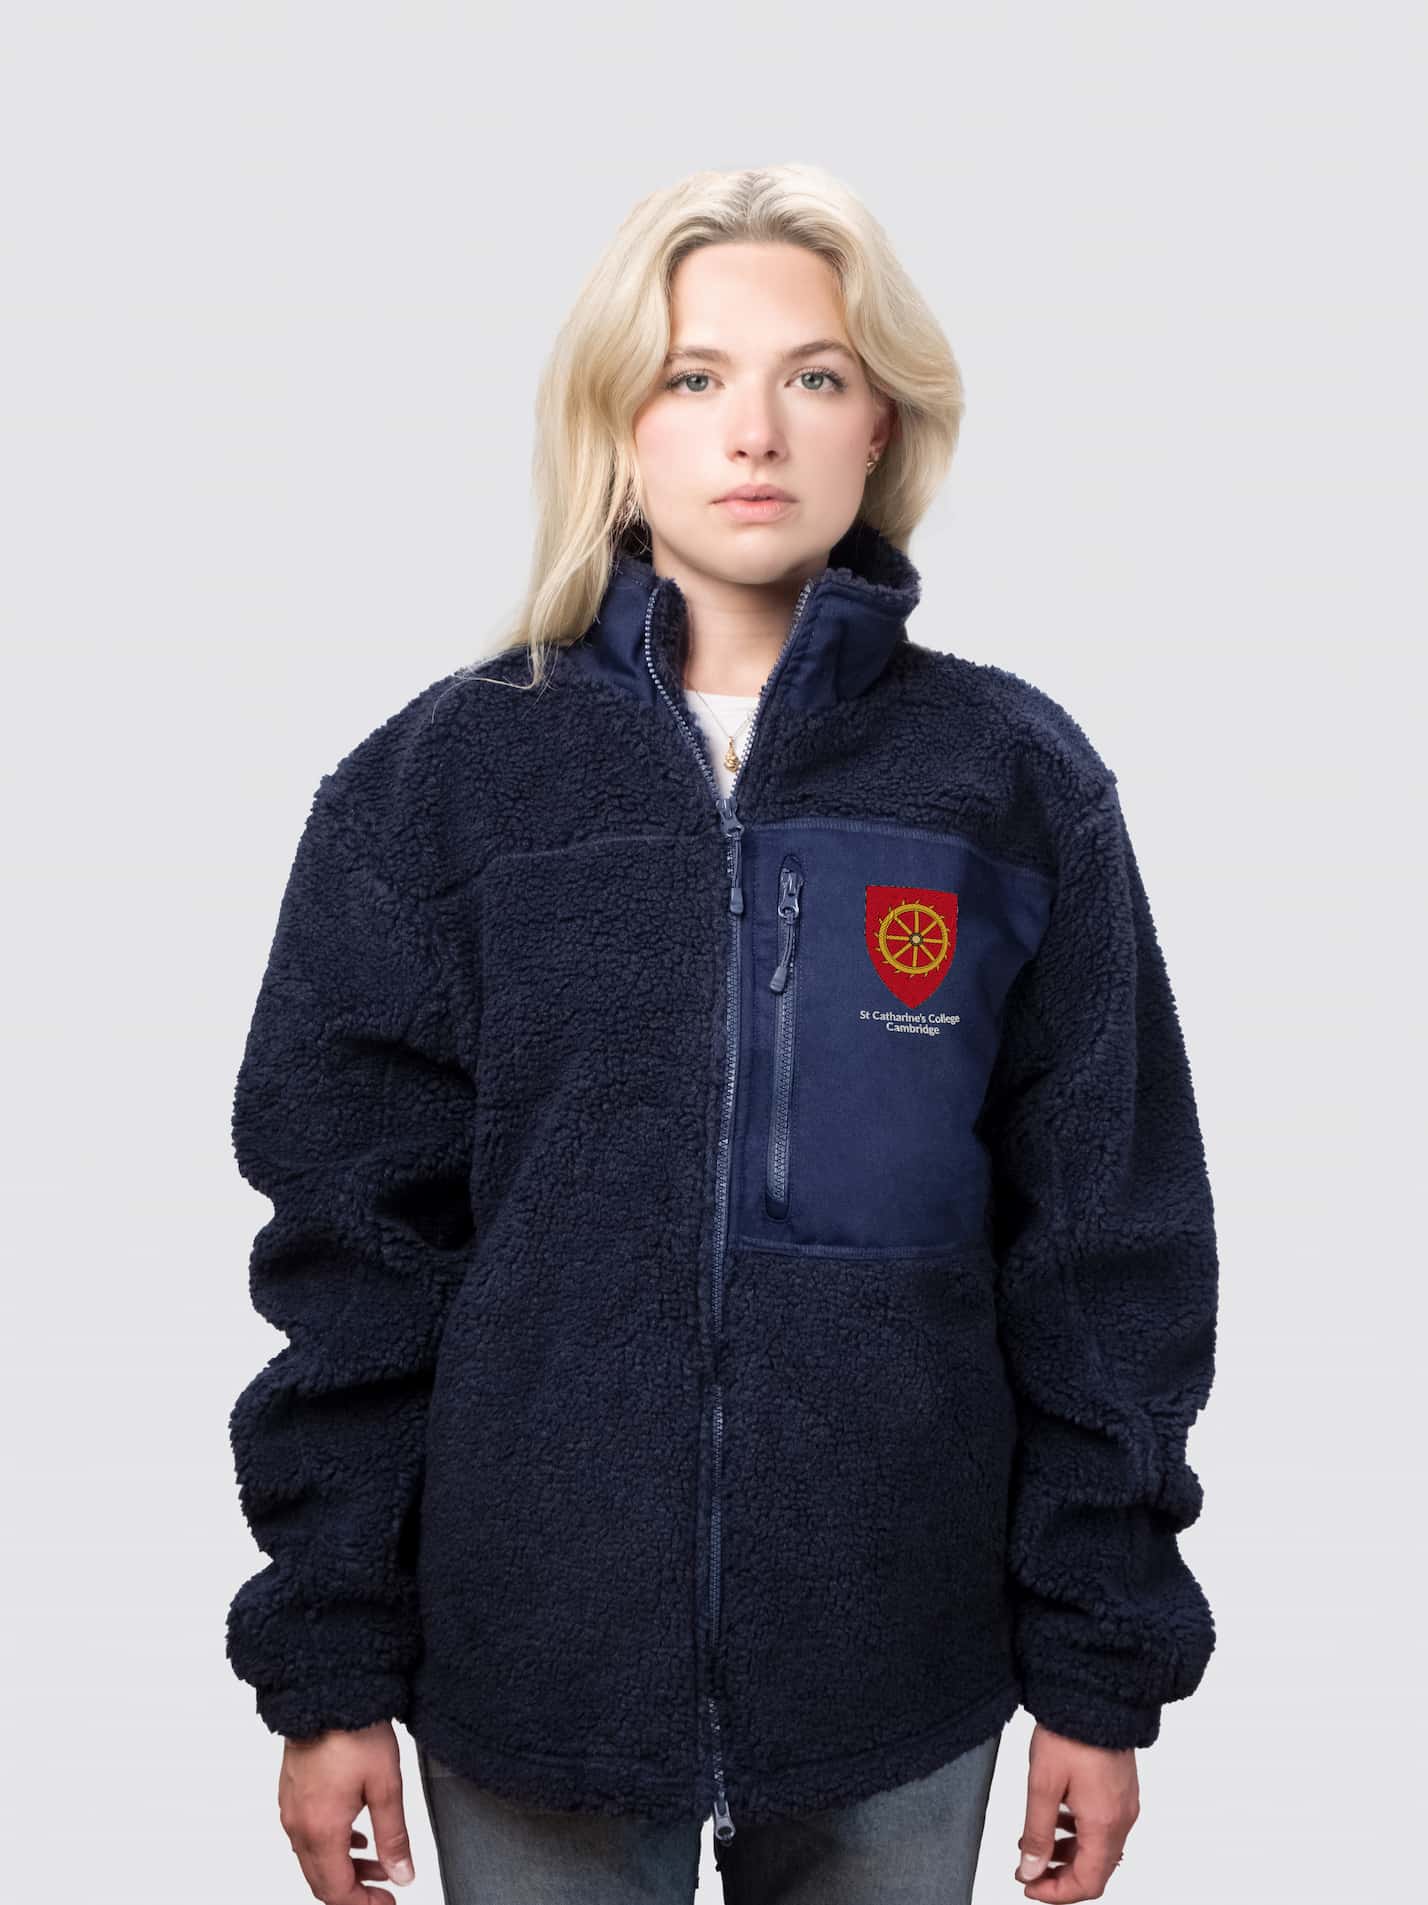 St Catharine's College Cambridge Unisex Fluffy Sherpa Fleece Jacket